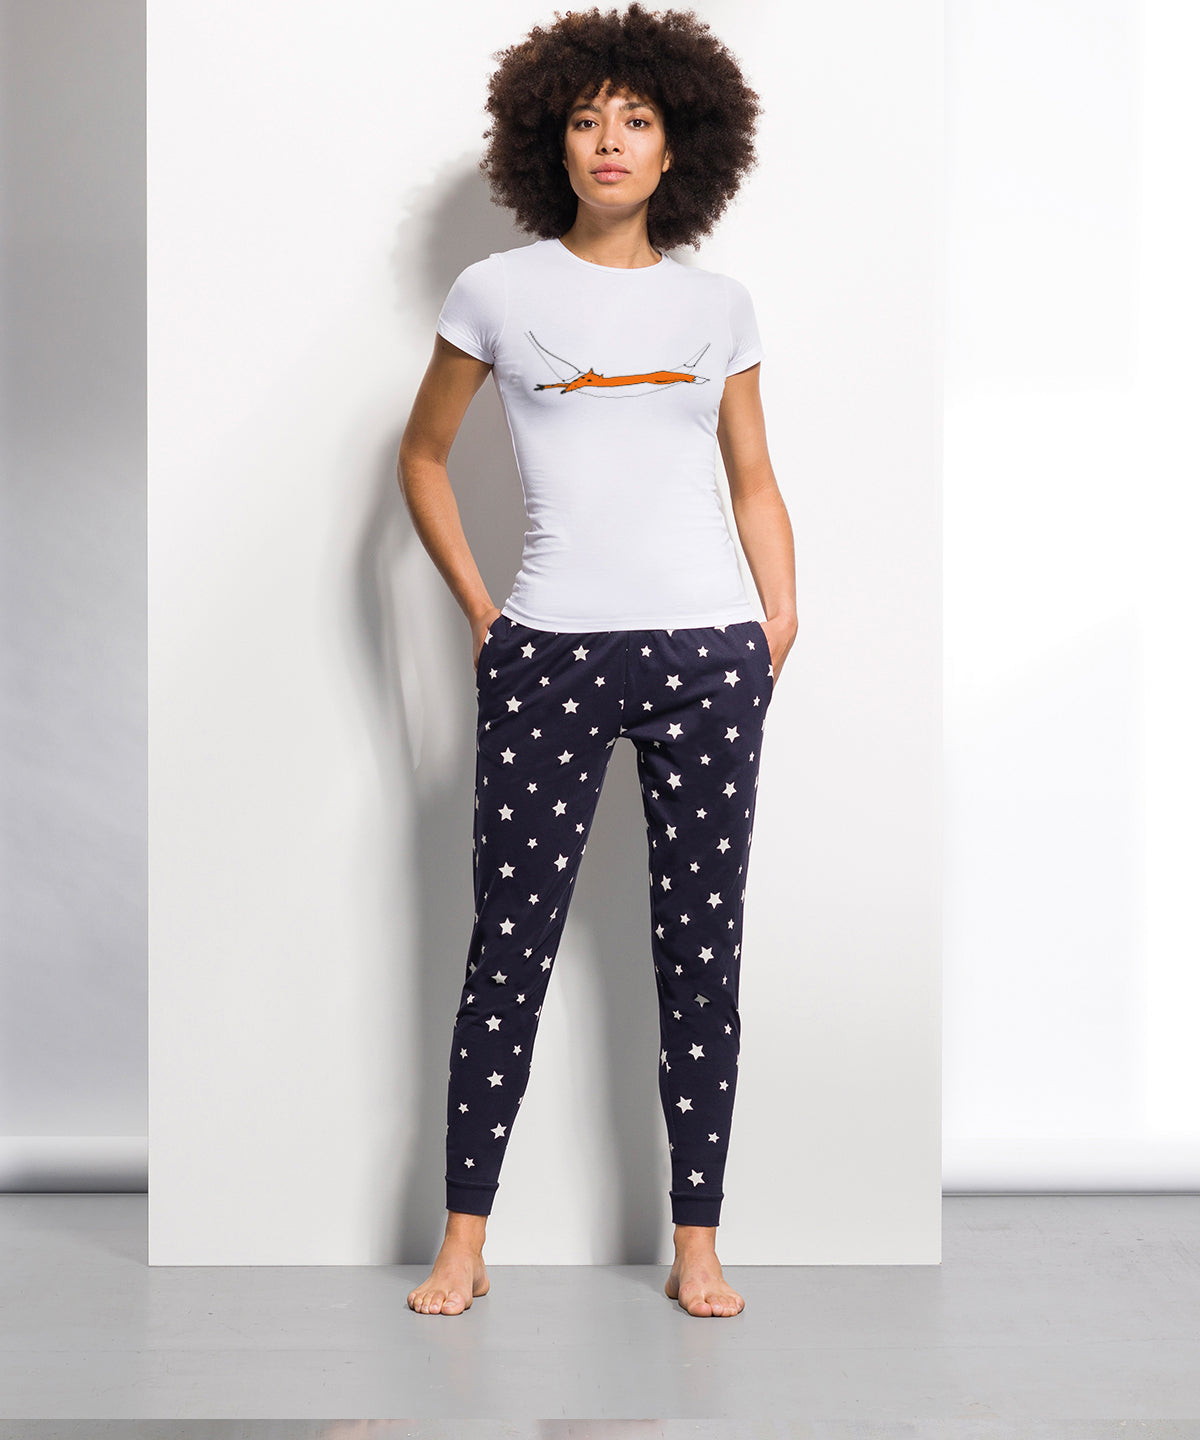 Mix & Match women pyjamas